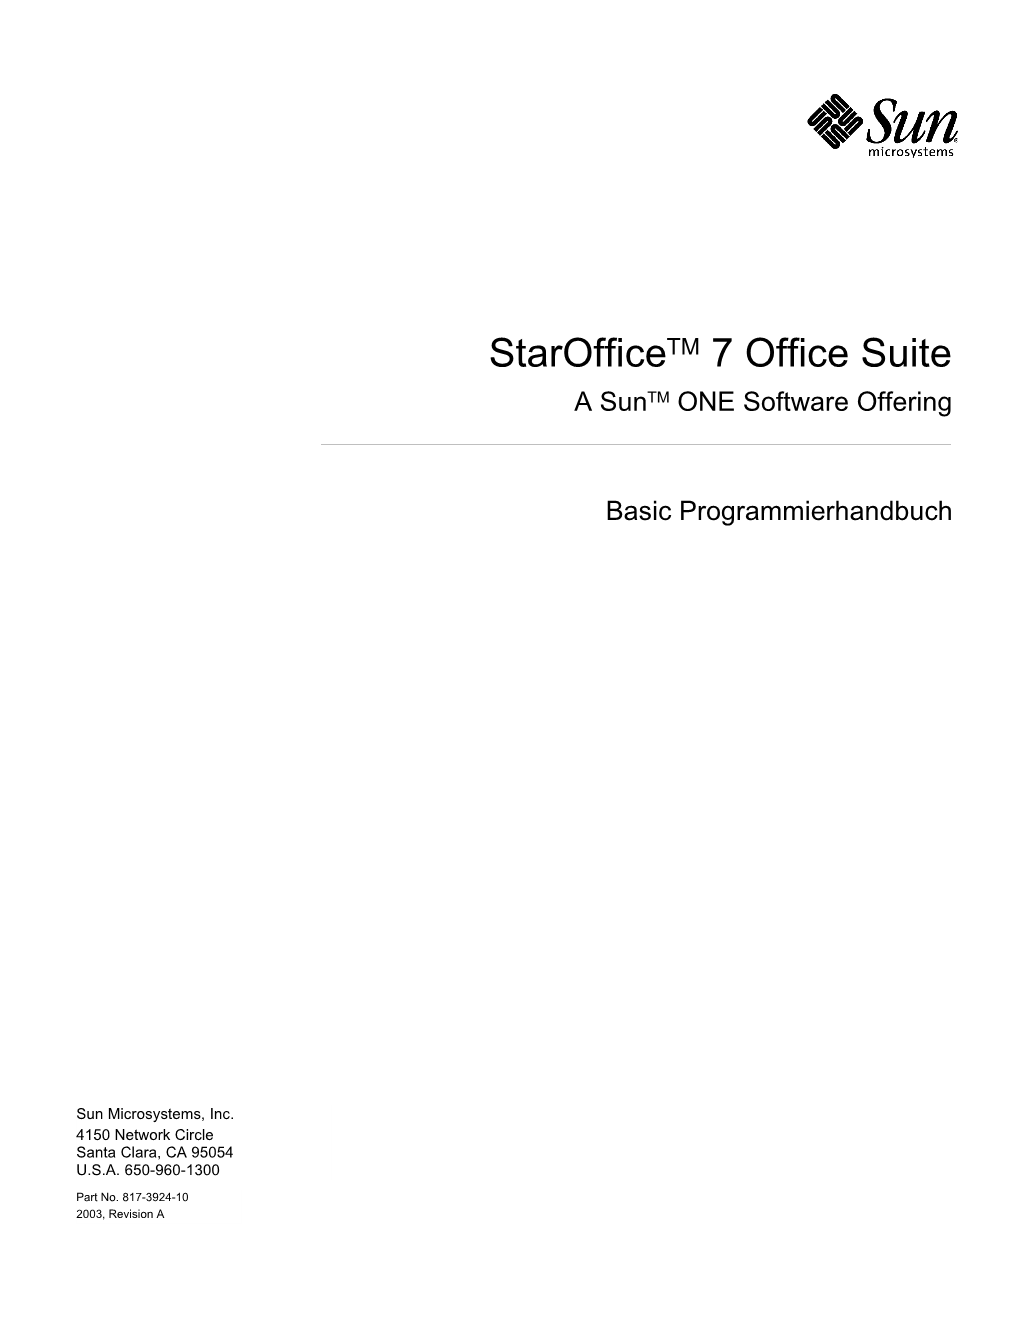 Staroffice 7 Office Suite